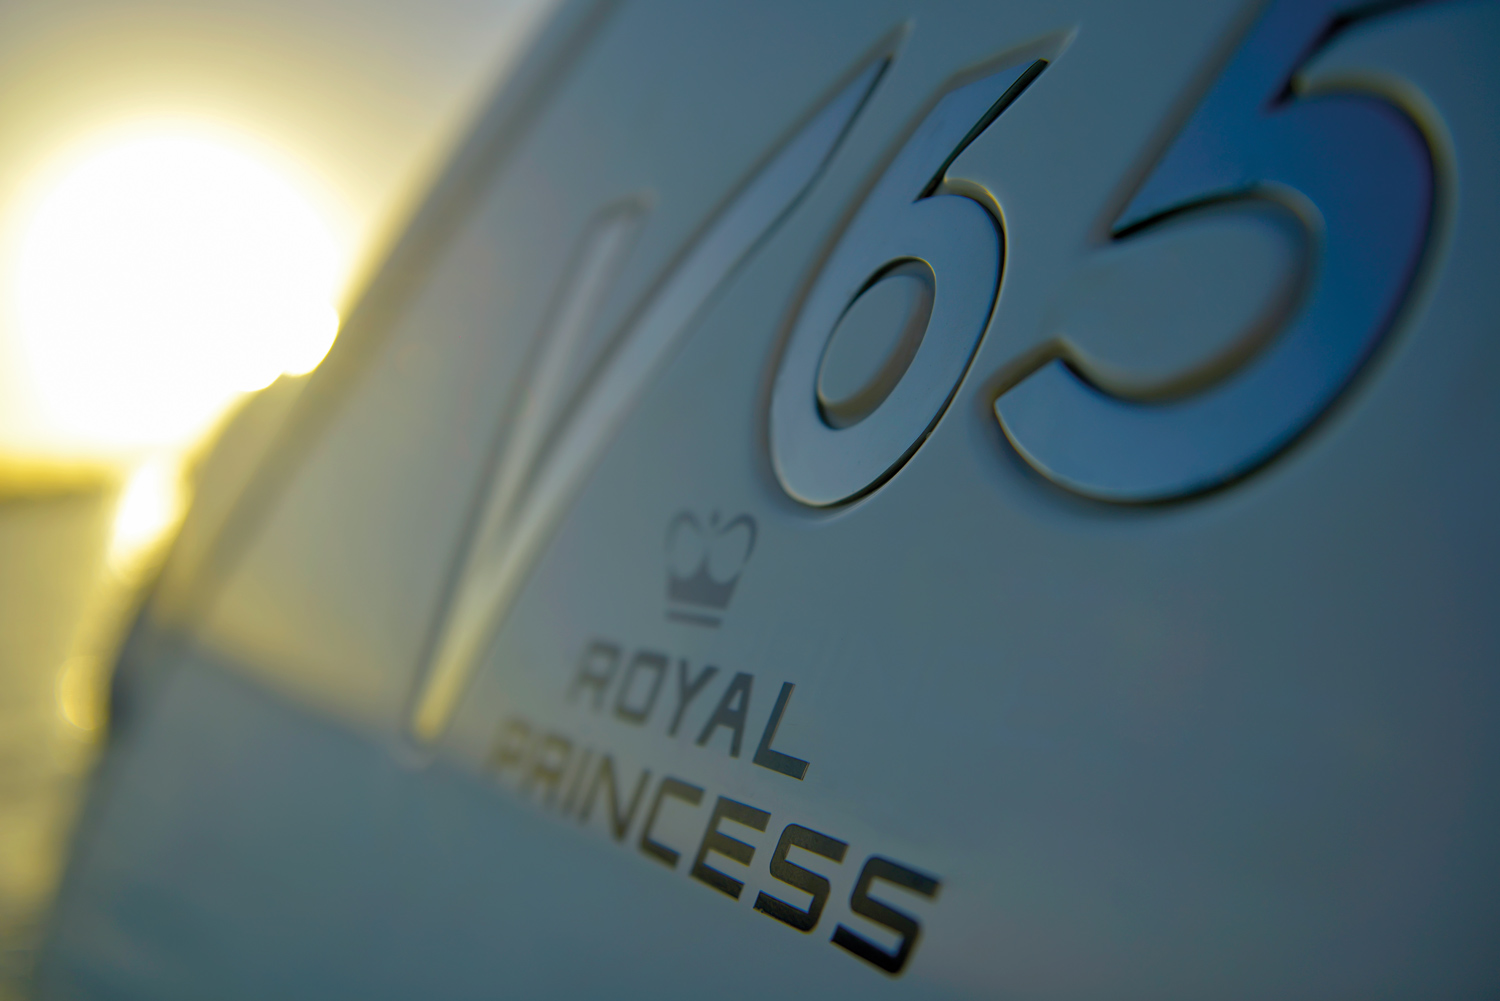 Luxury yacht Royal Princess - Royal Palm Mauritius